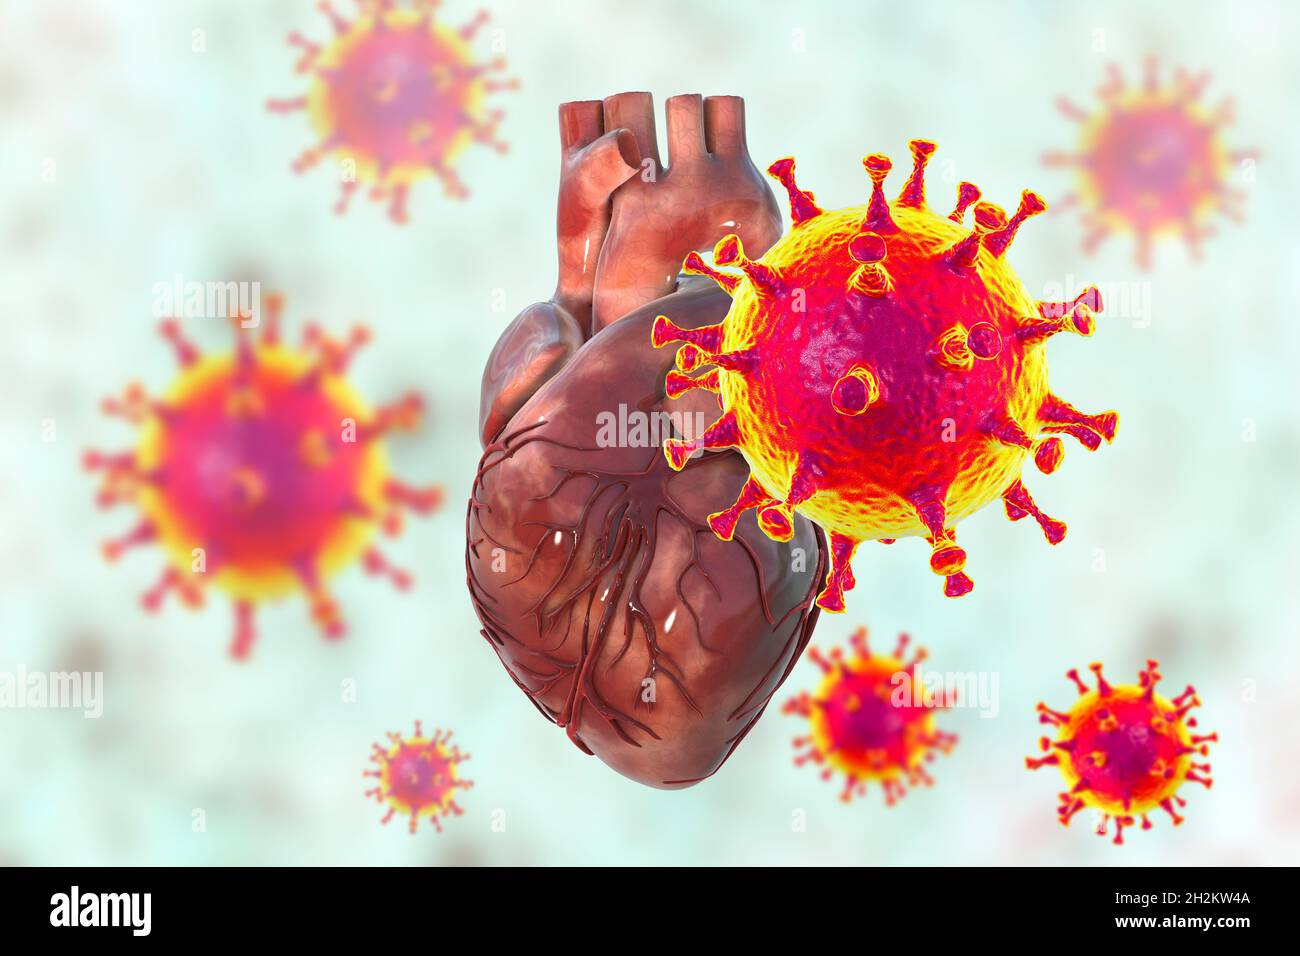 Covid-19 viruses affecting the heart, illustration Stock Photo